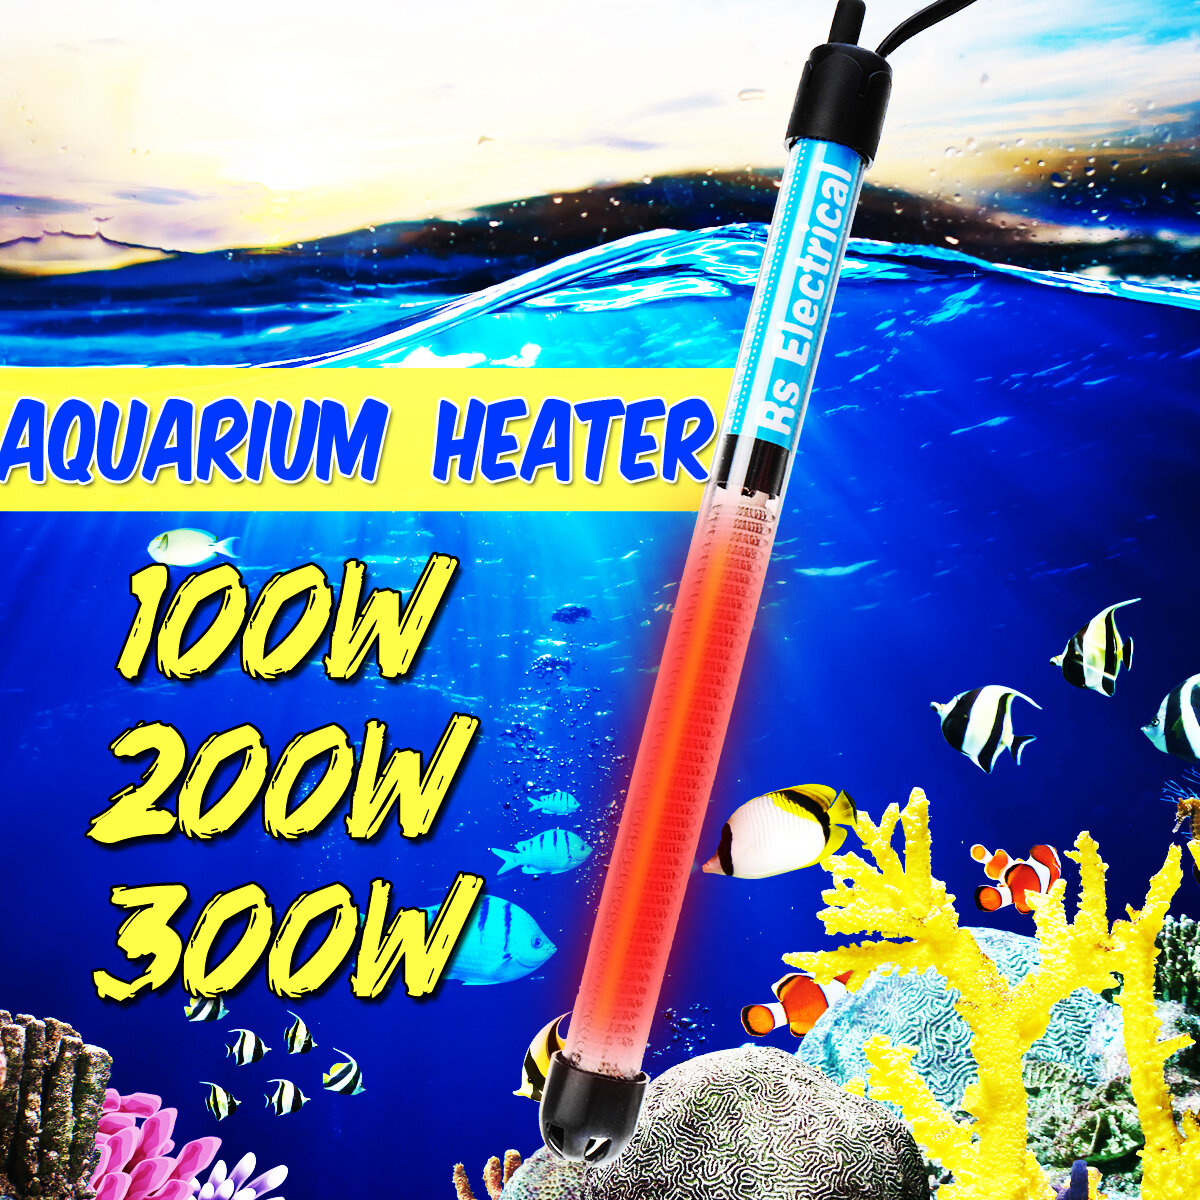 

100W 200W 300W Aquarium Water Heater Heating Submersible Tank Thermostat